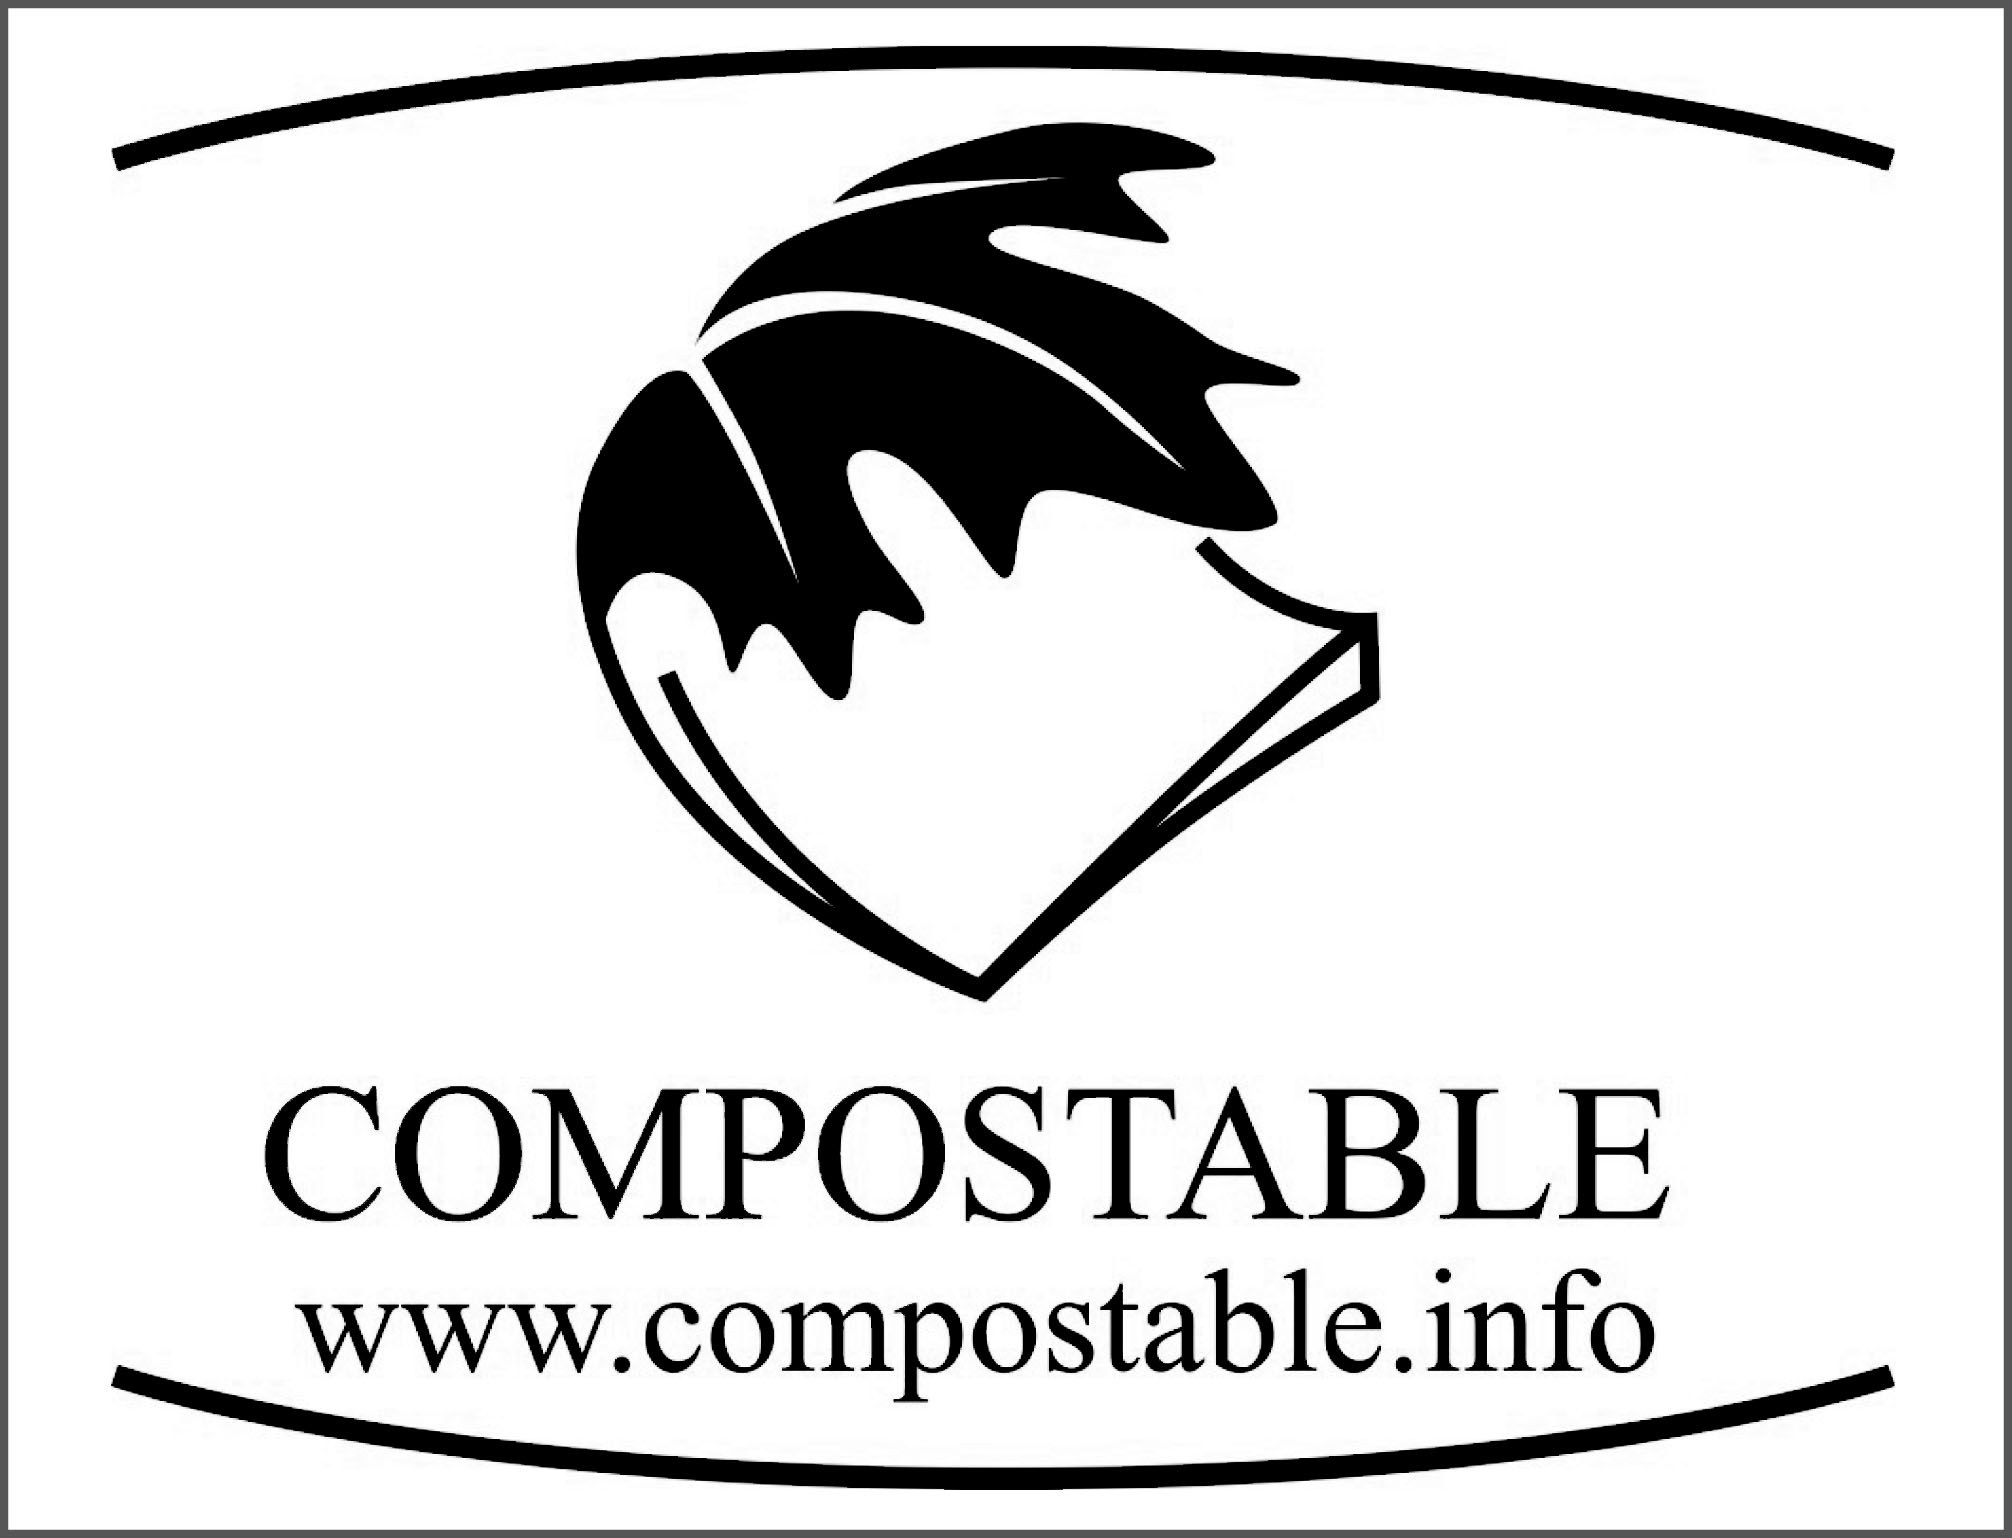 Certified Compostable liner